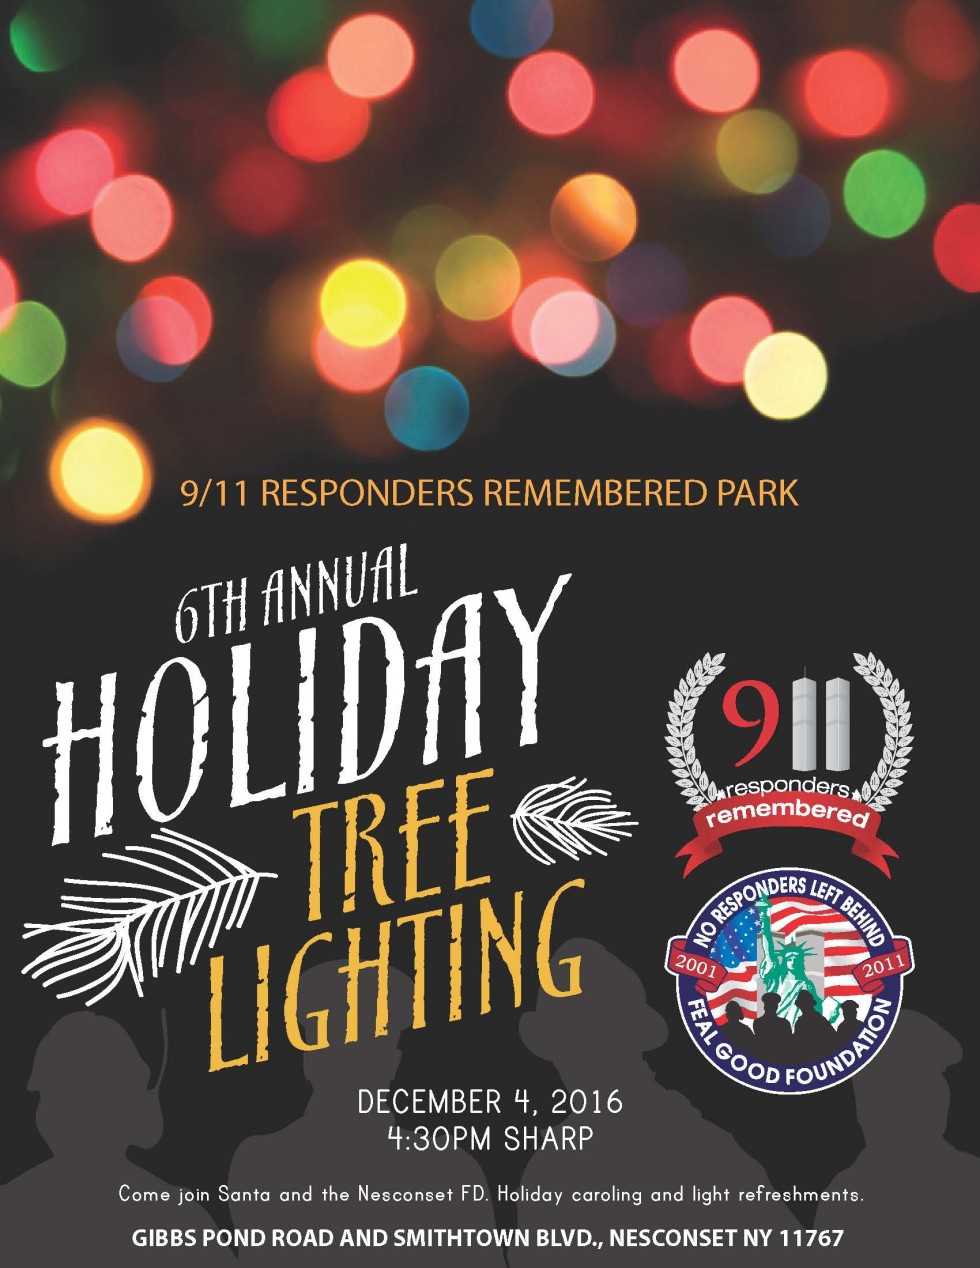 6th Annual Holiday Tree Lighting